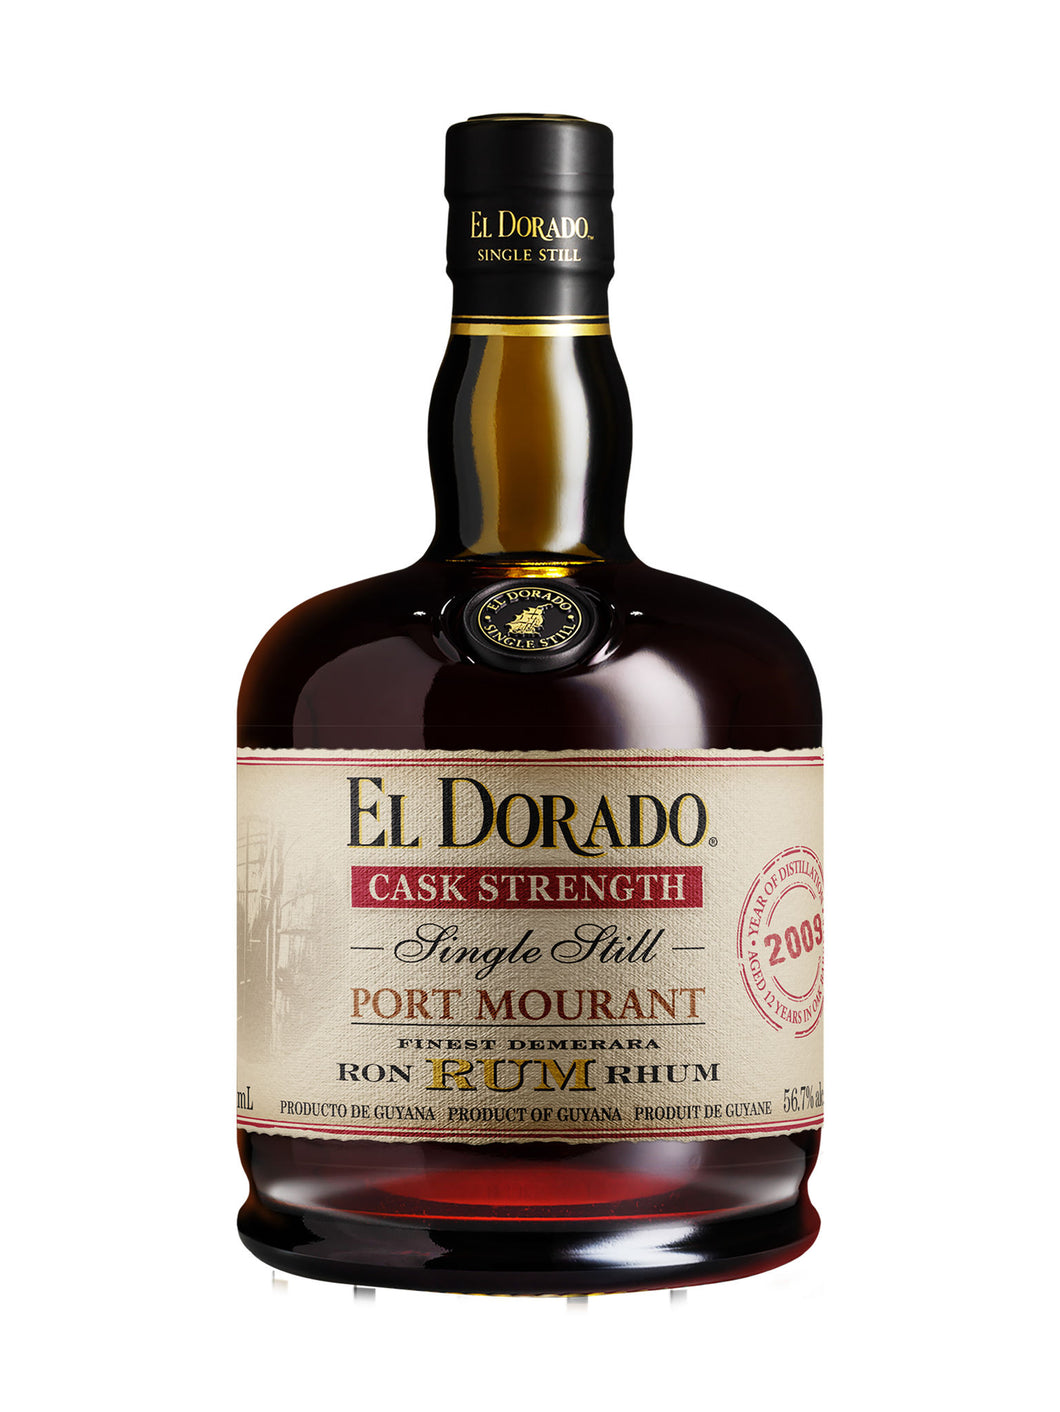 El Dorado Cask Strength Single Still Port Mourant 750 ml bottle